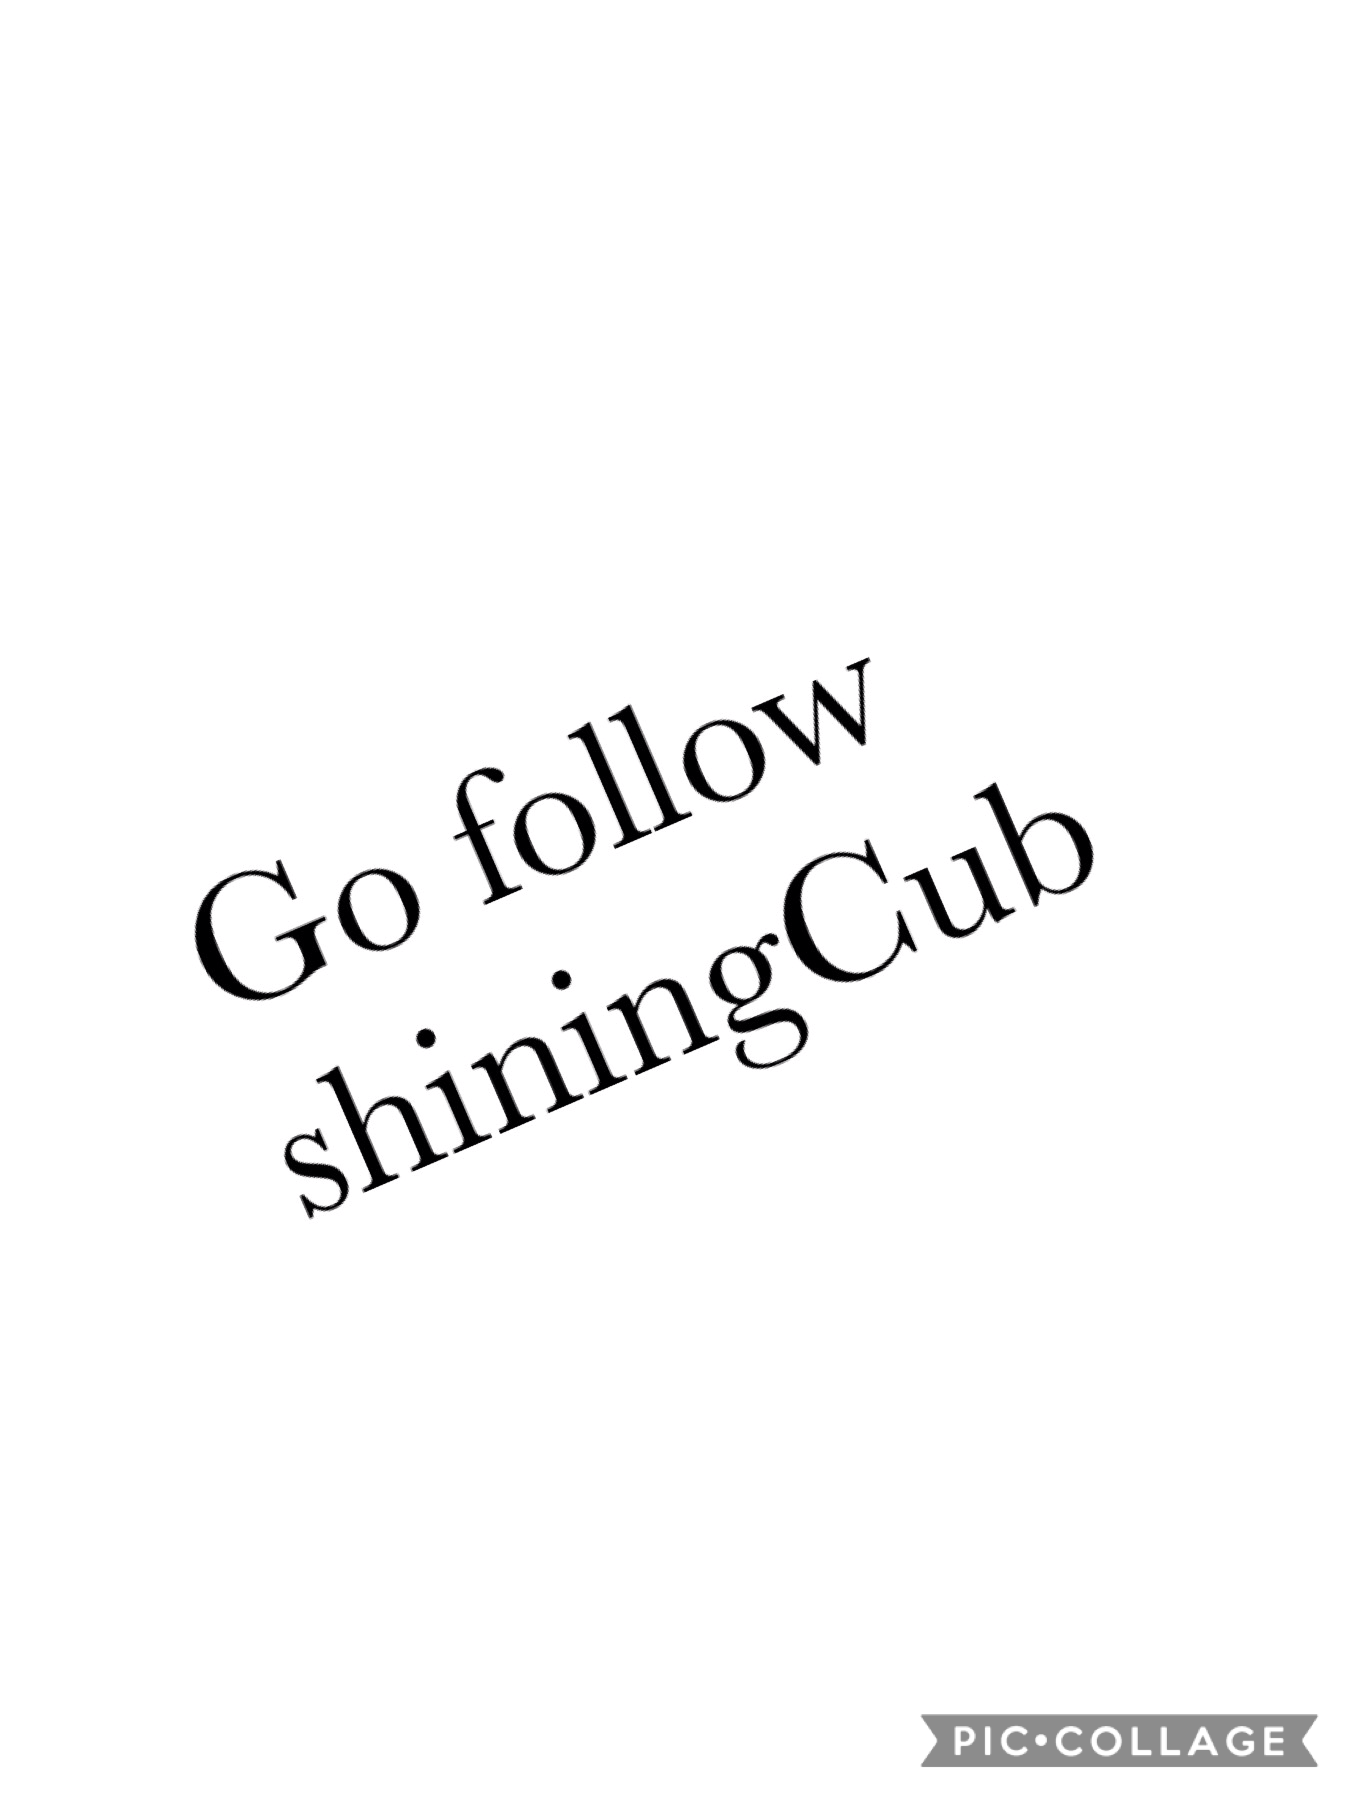 Go follow shiningCub